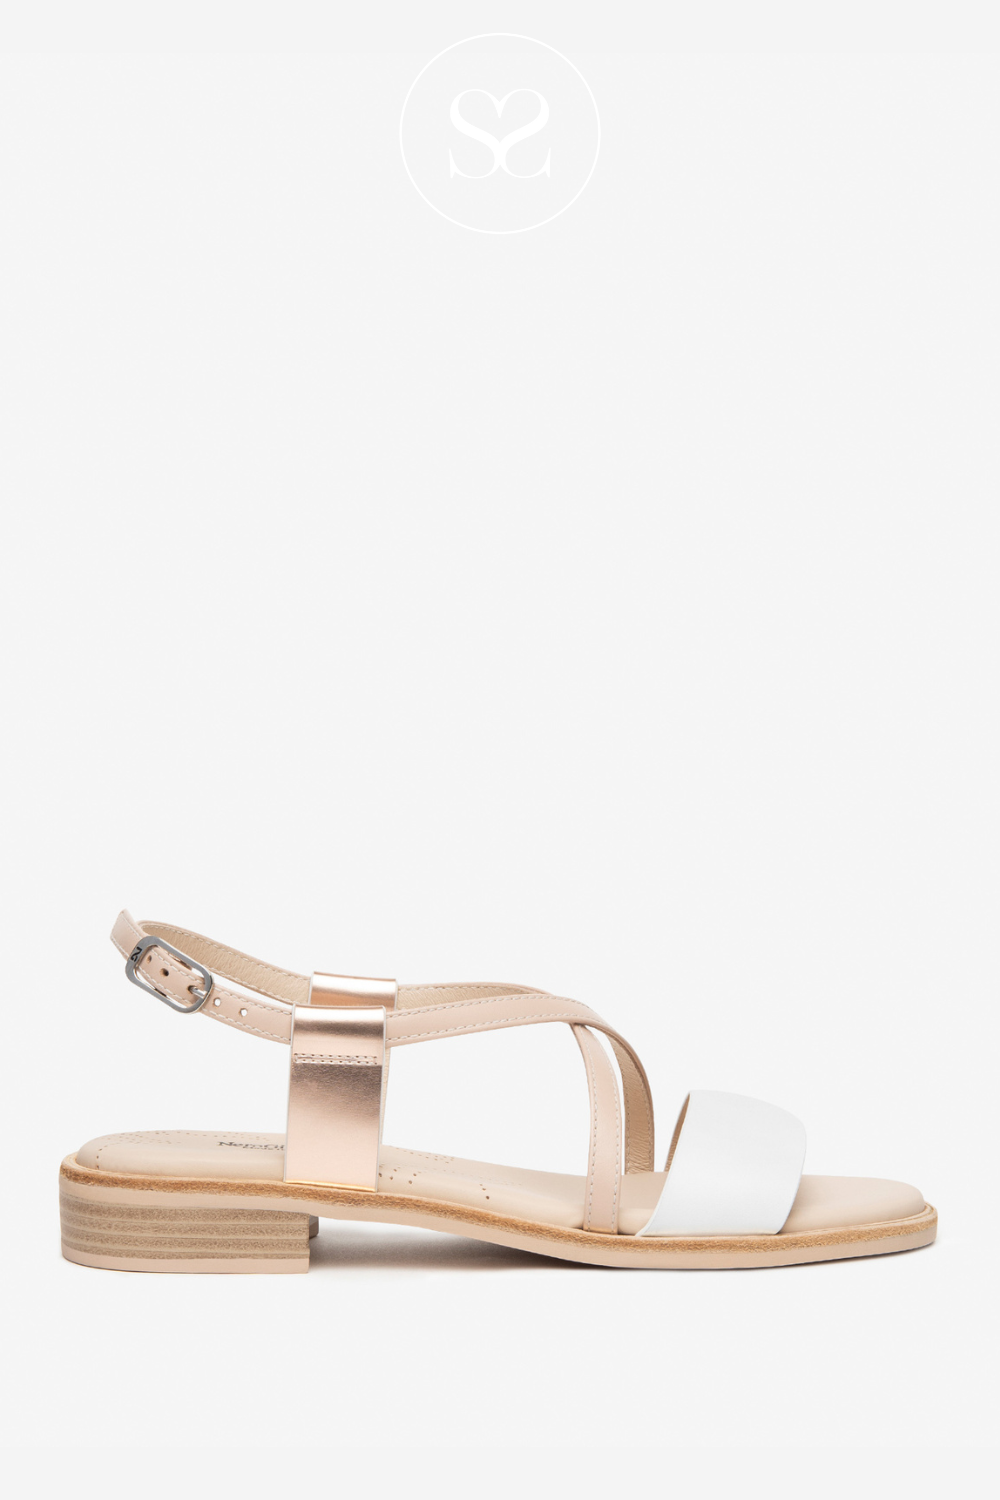 Nero Giardini e410462d White and rose gold flat leather sandals